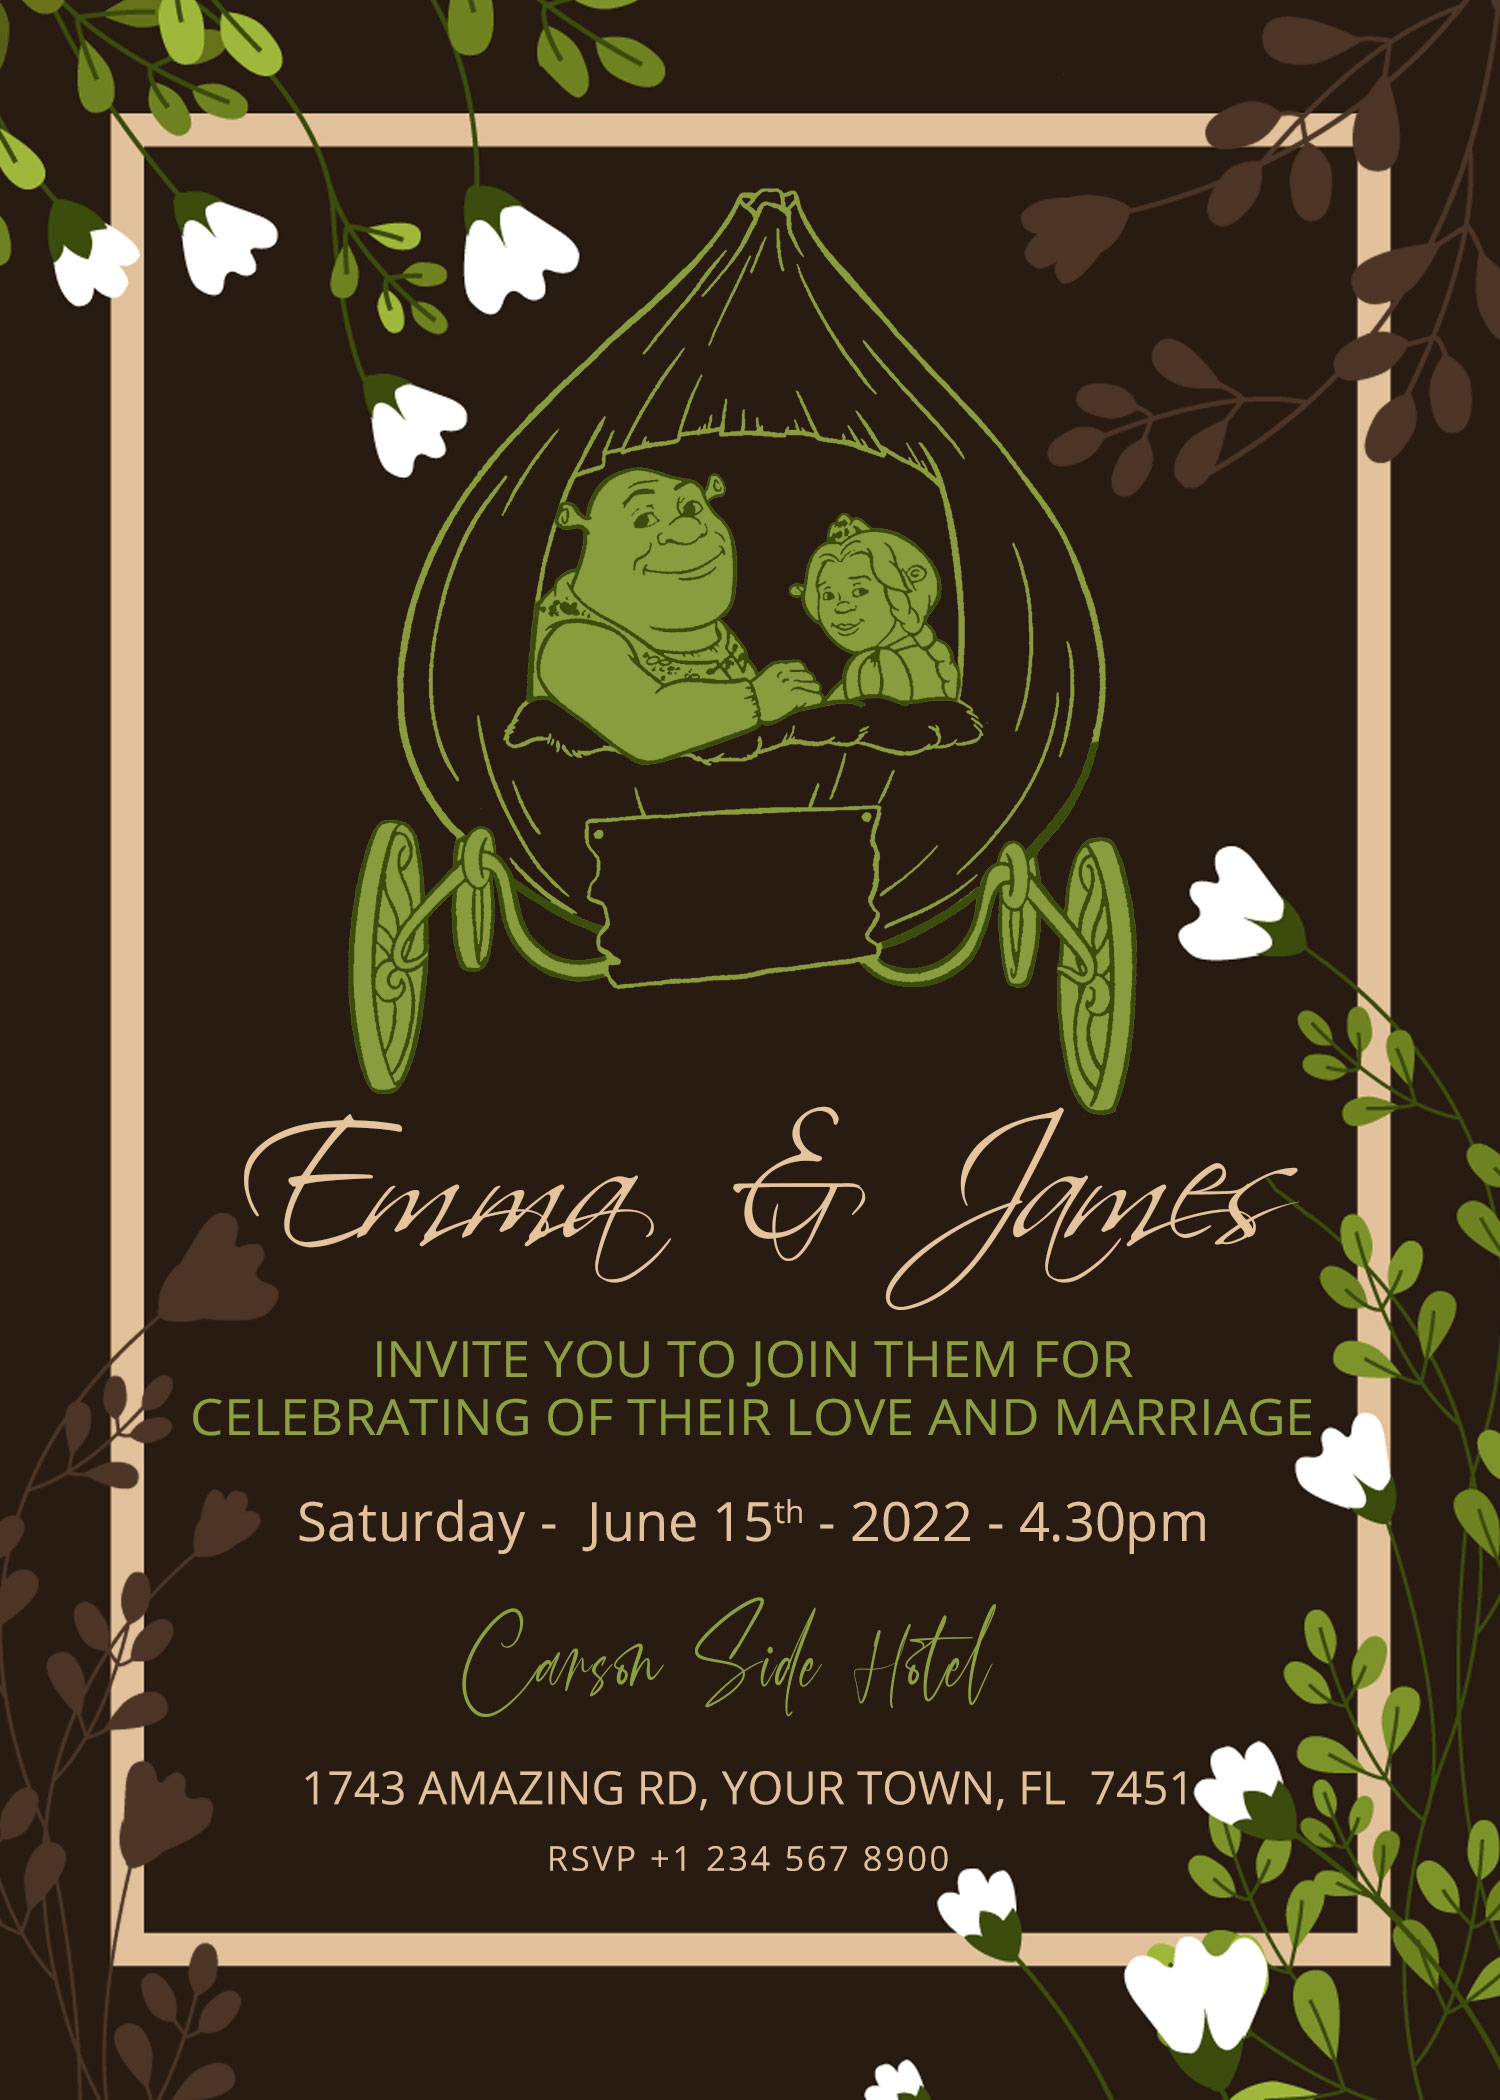 Shrek & Fiona Wedding Invitation